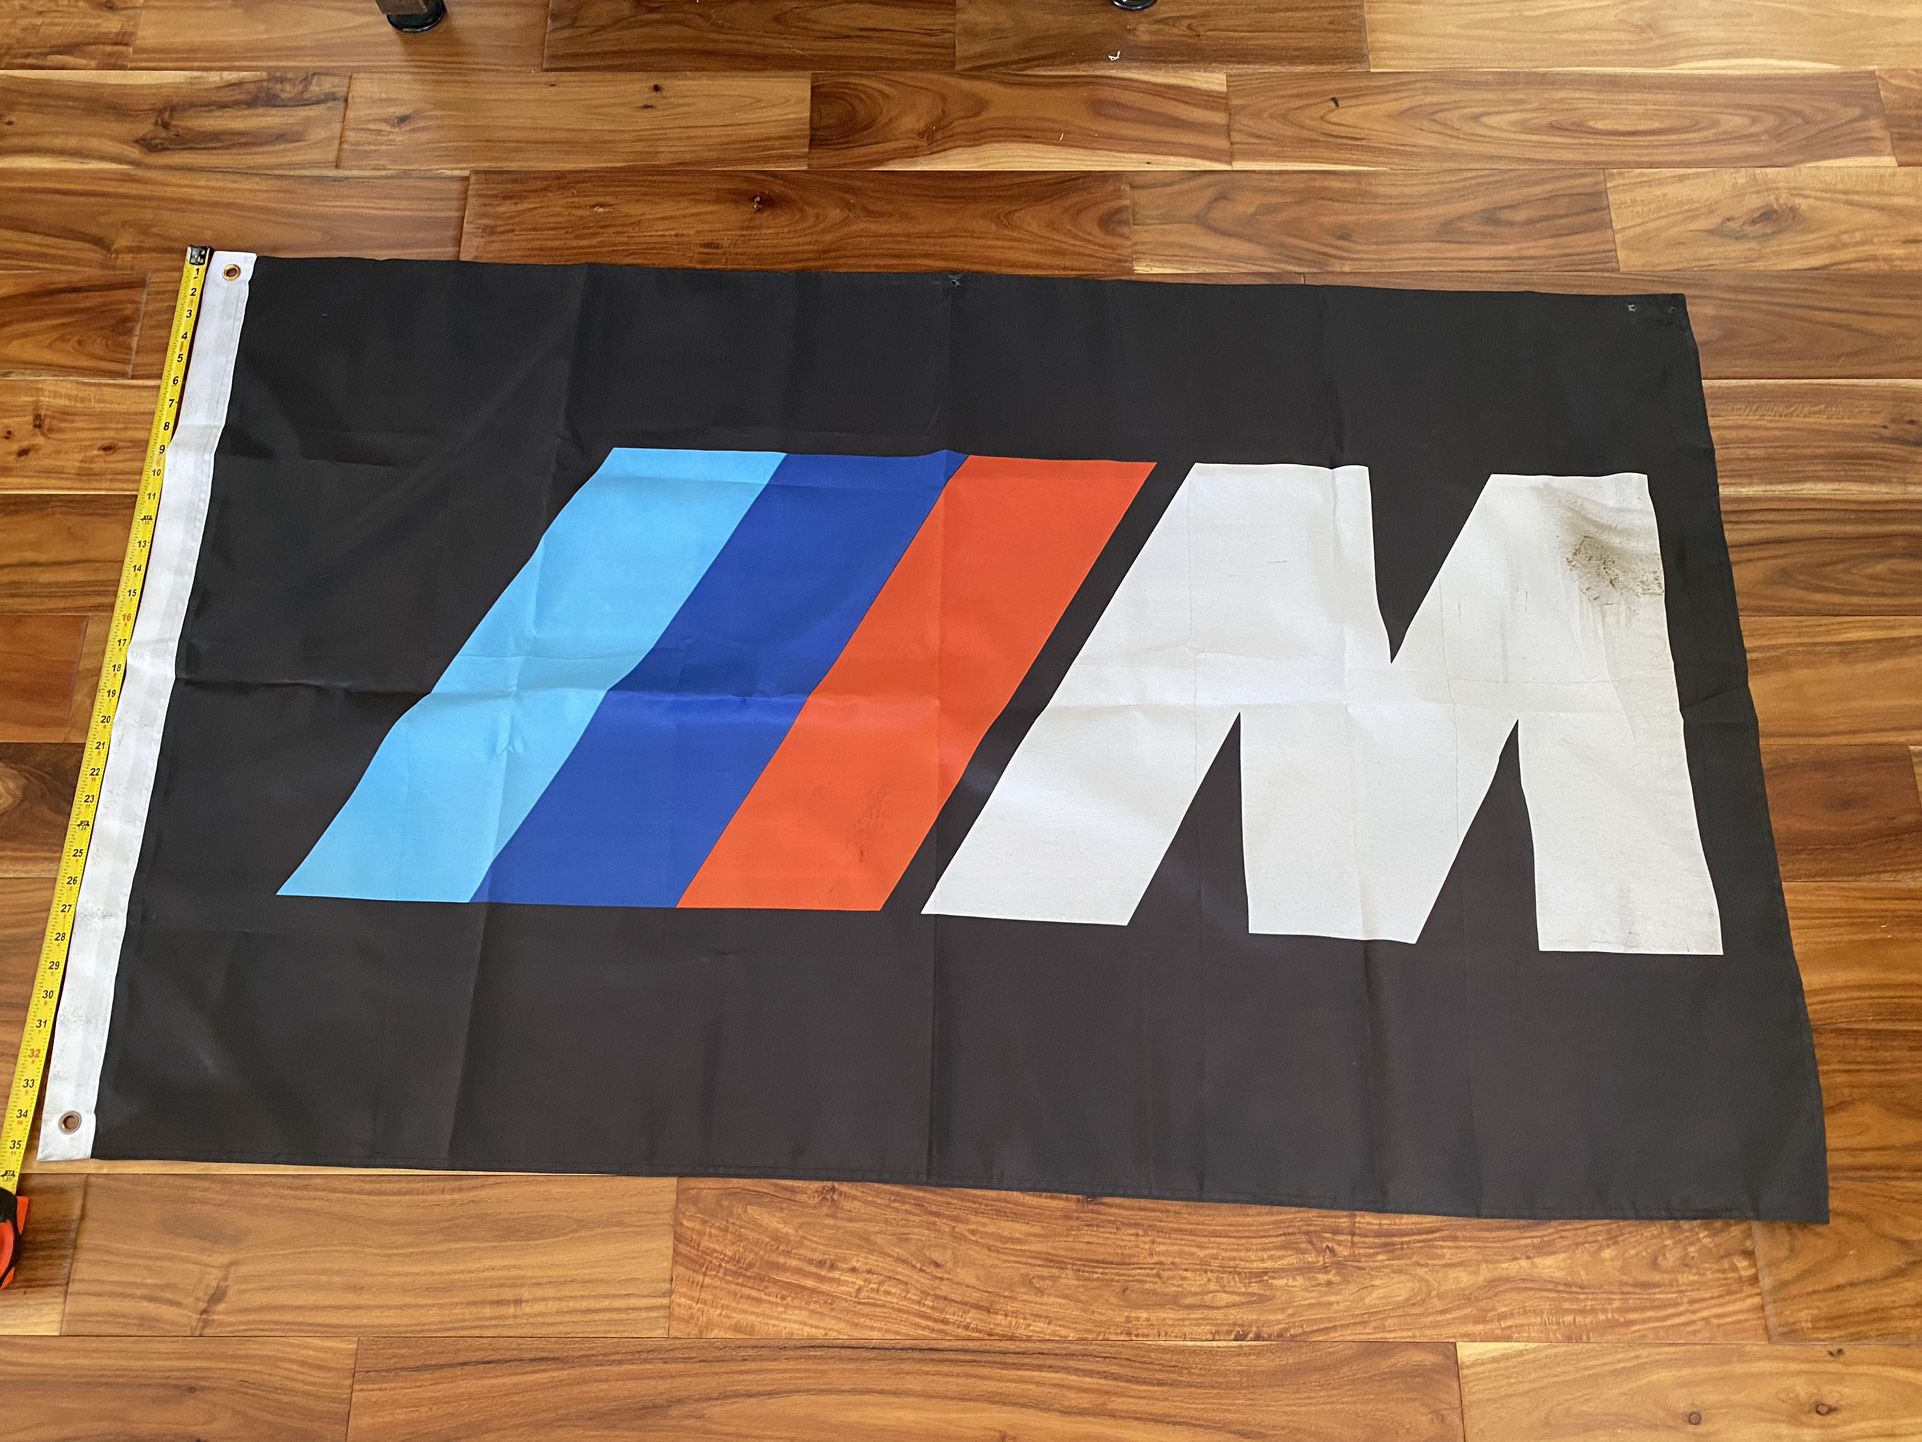 BMW M series flag banner $20